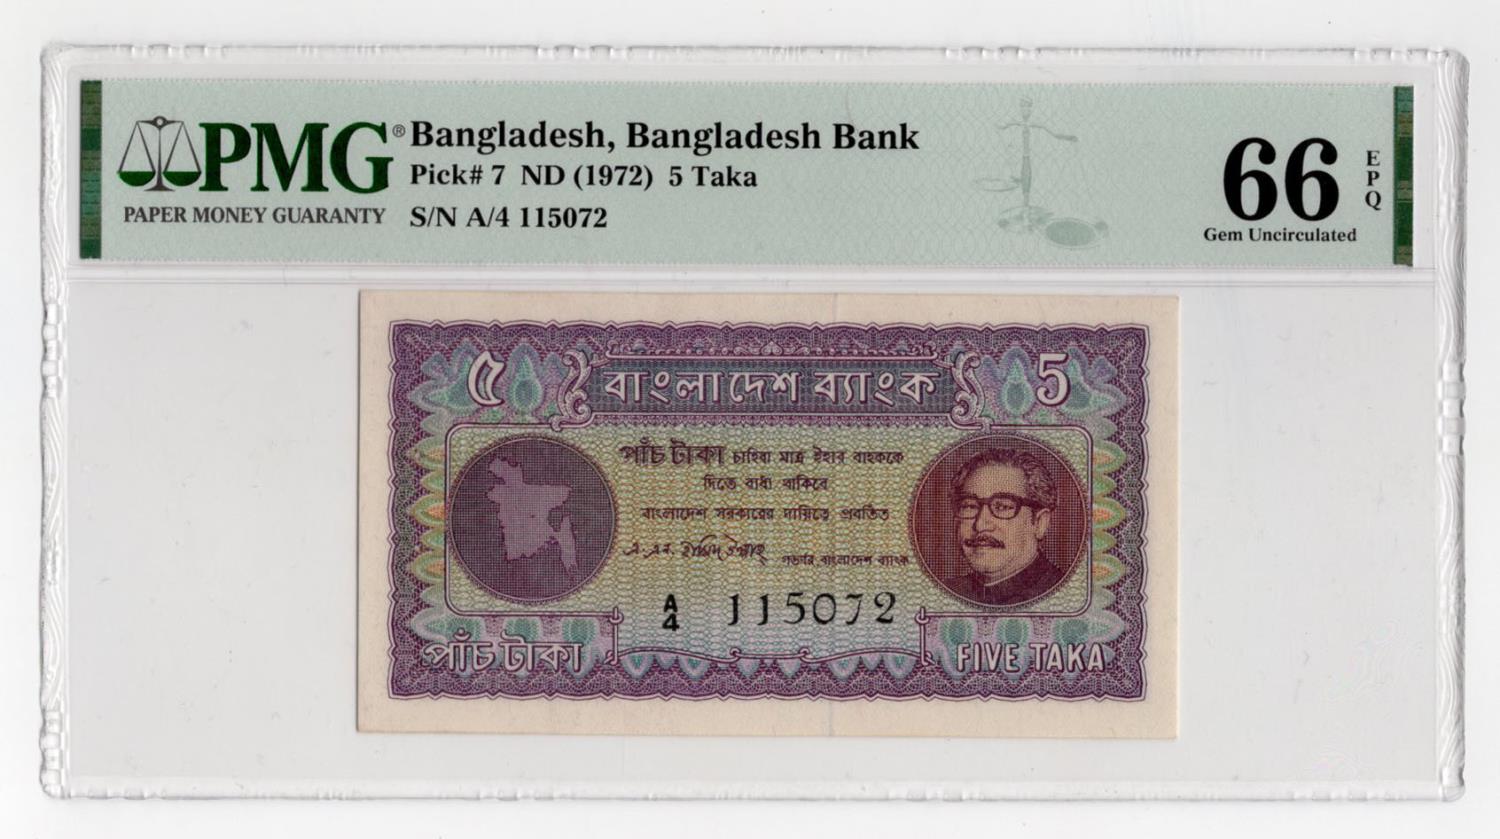 Bangladesh 5 Taka issued 1972, serial A/4 115072 (BNB B301a, Pick7) in PMG holder graded 66 EPQ